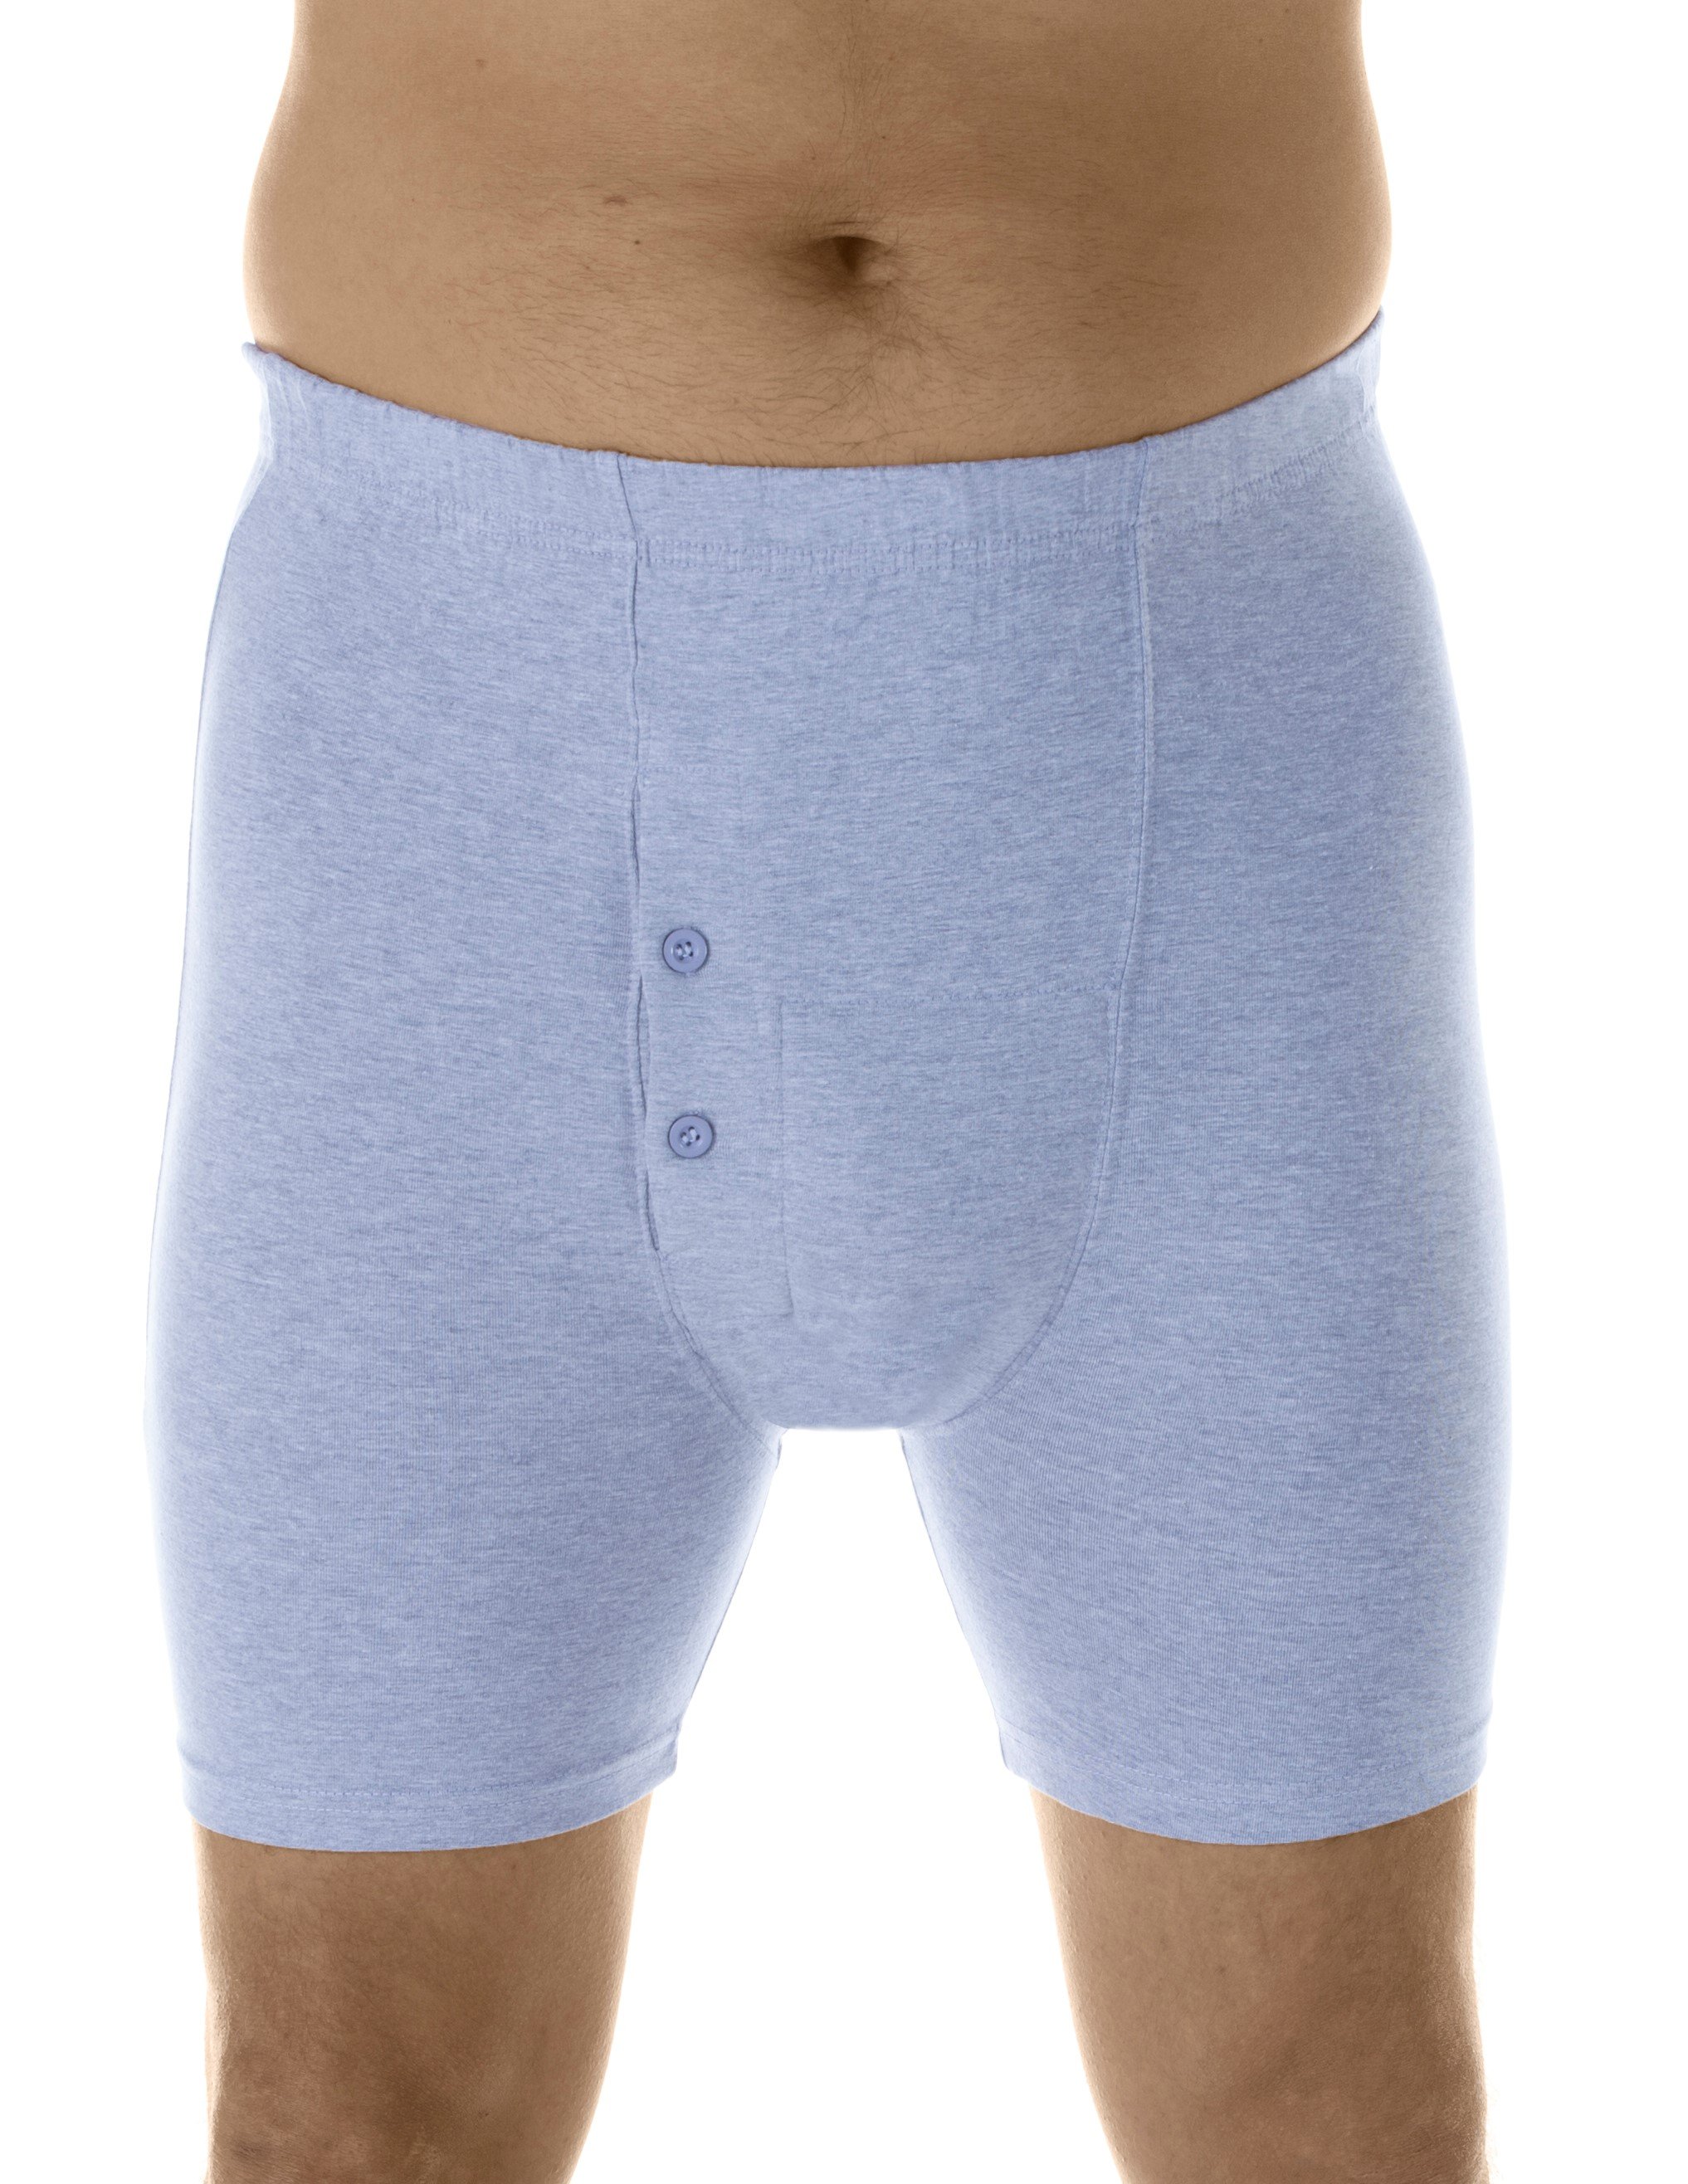 Wearever Men's Washable Incontinence Underwear Boxer Briefs